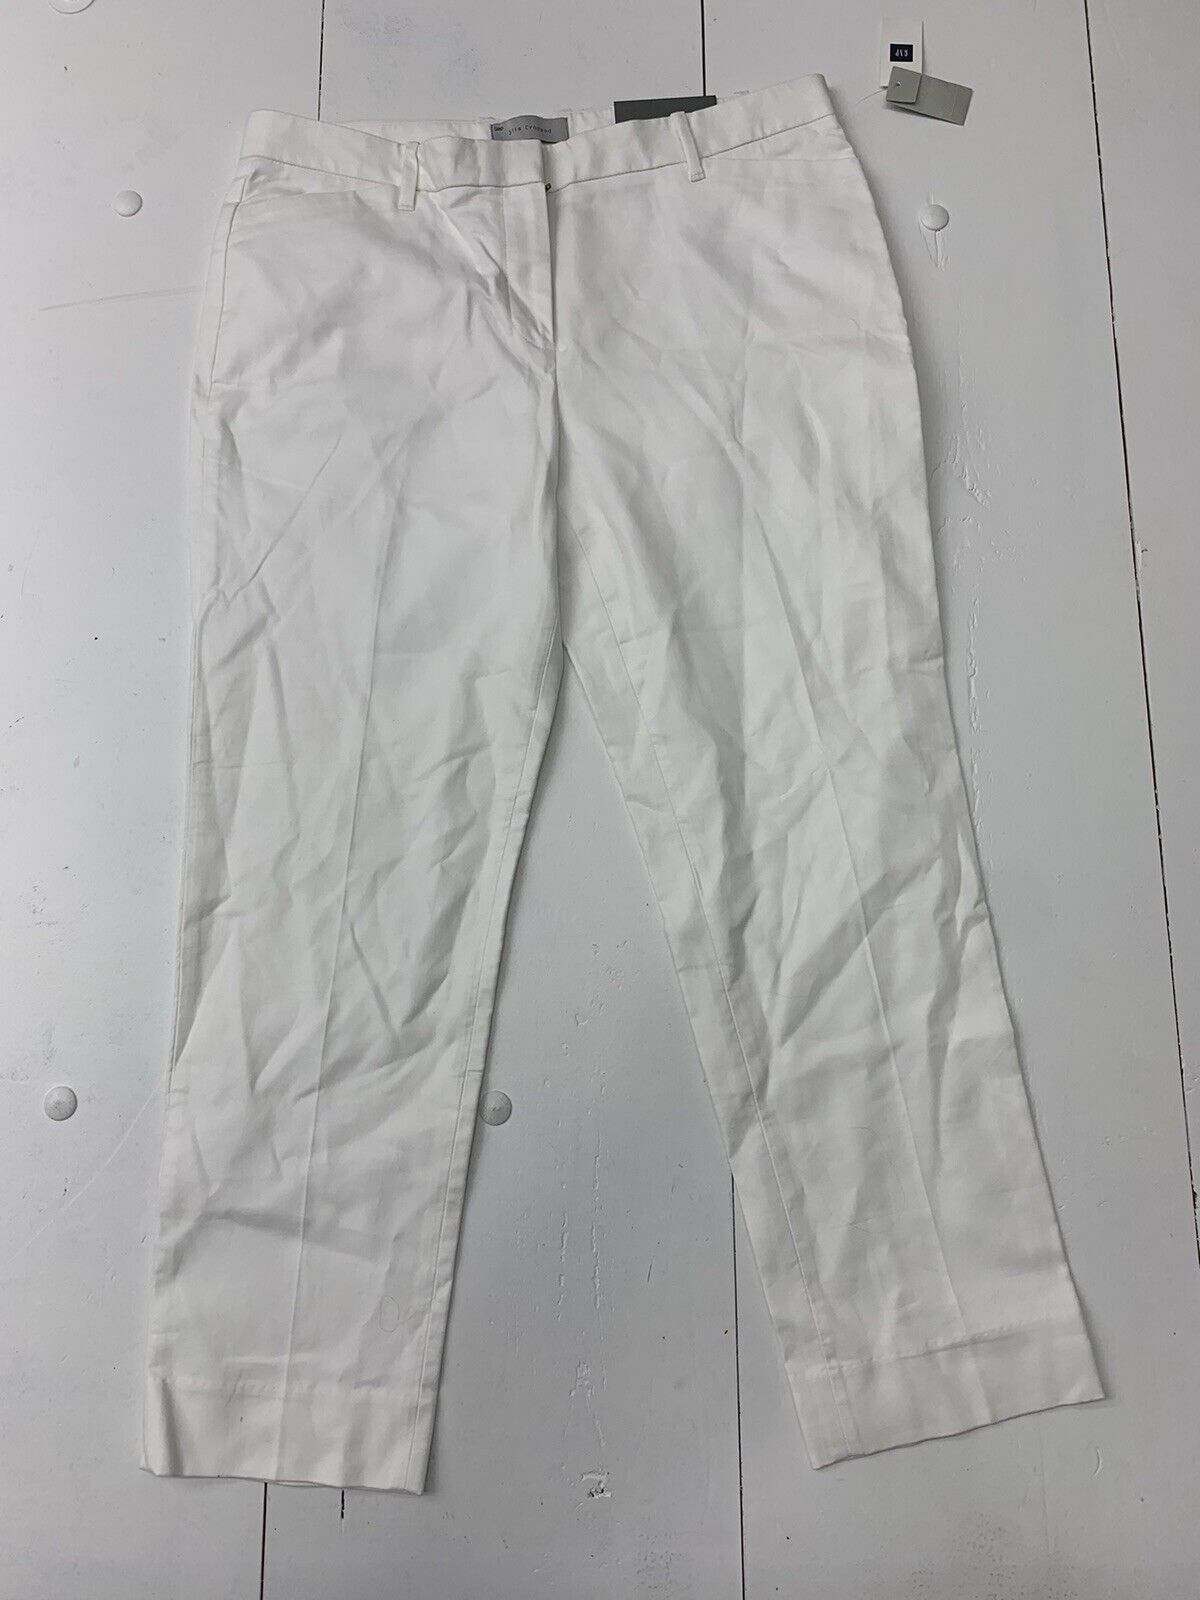 Mens Gap Dress Pants, 34 X 34, Dark Grey, Tailored Straight Fit, Flat Front  | eBay